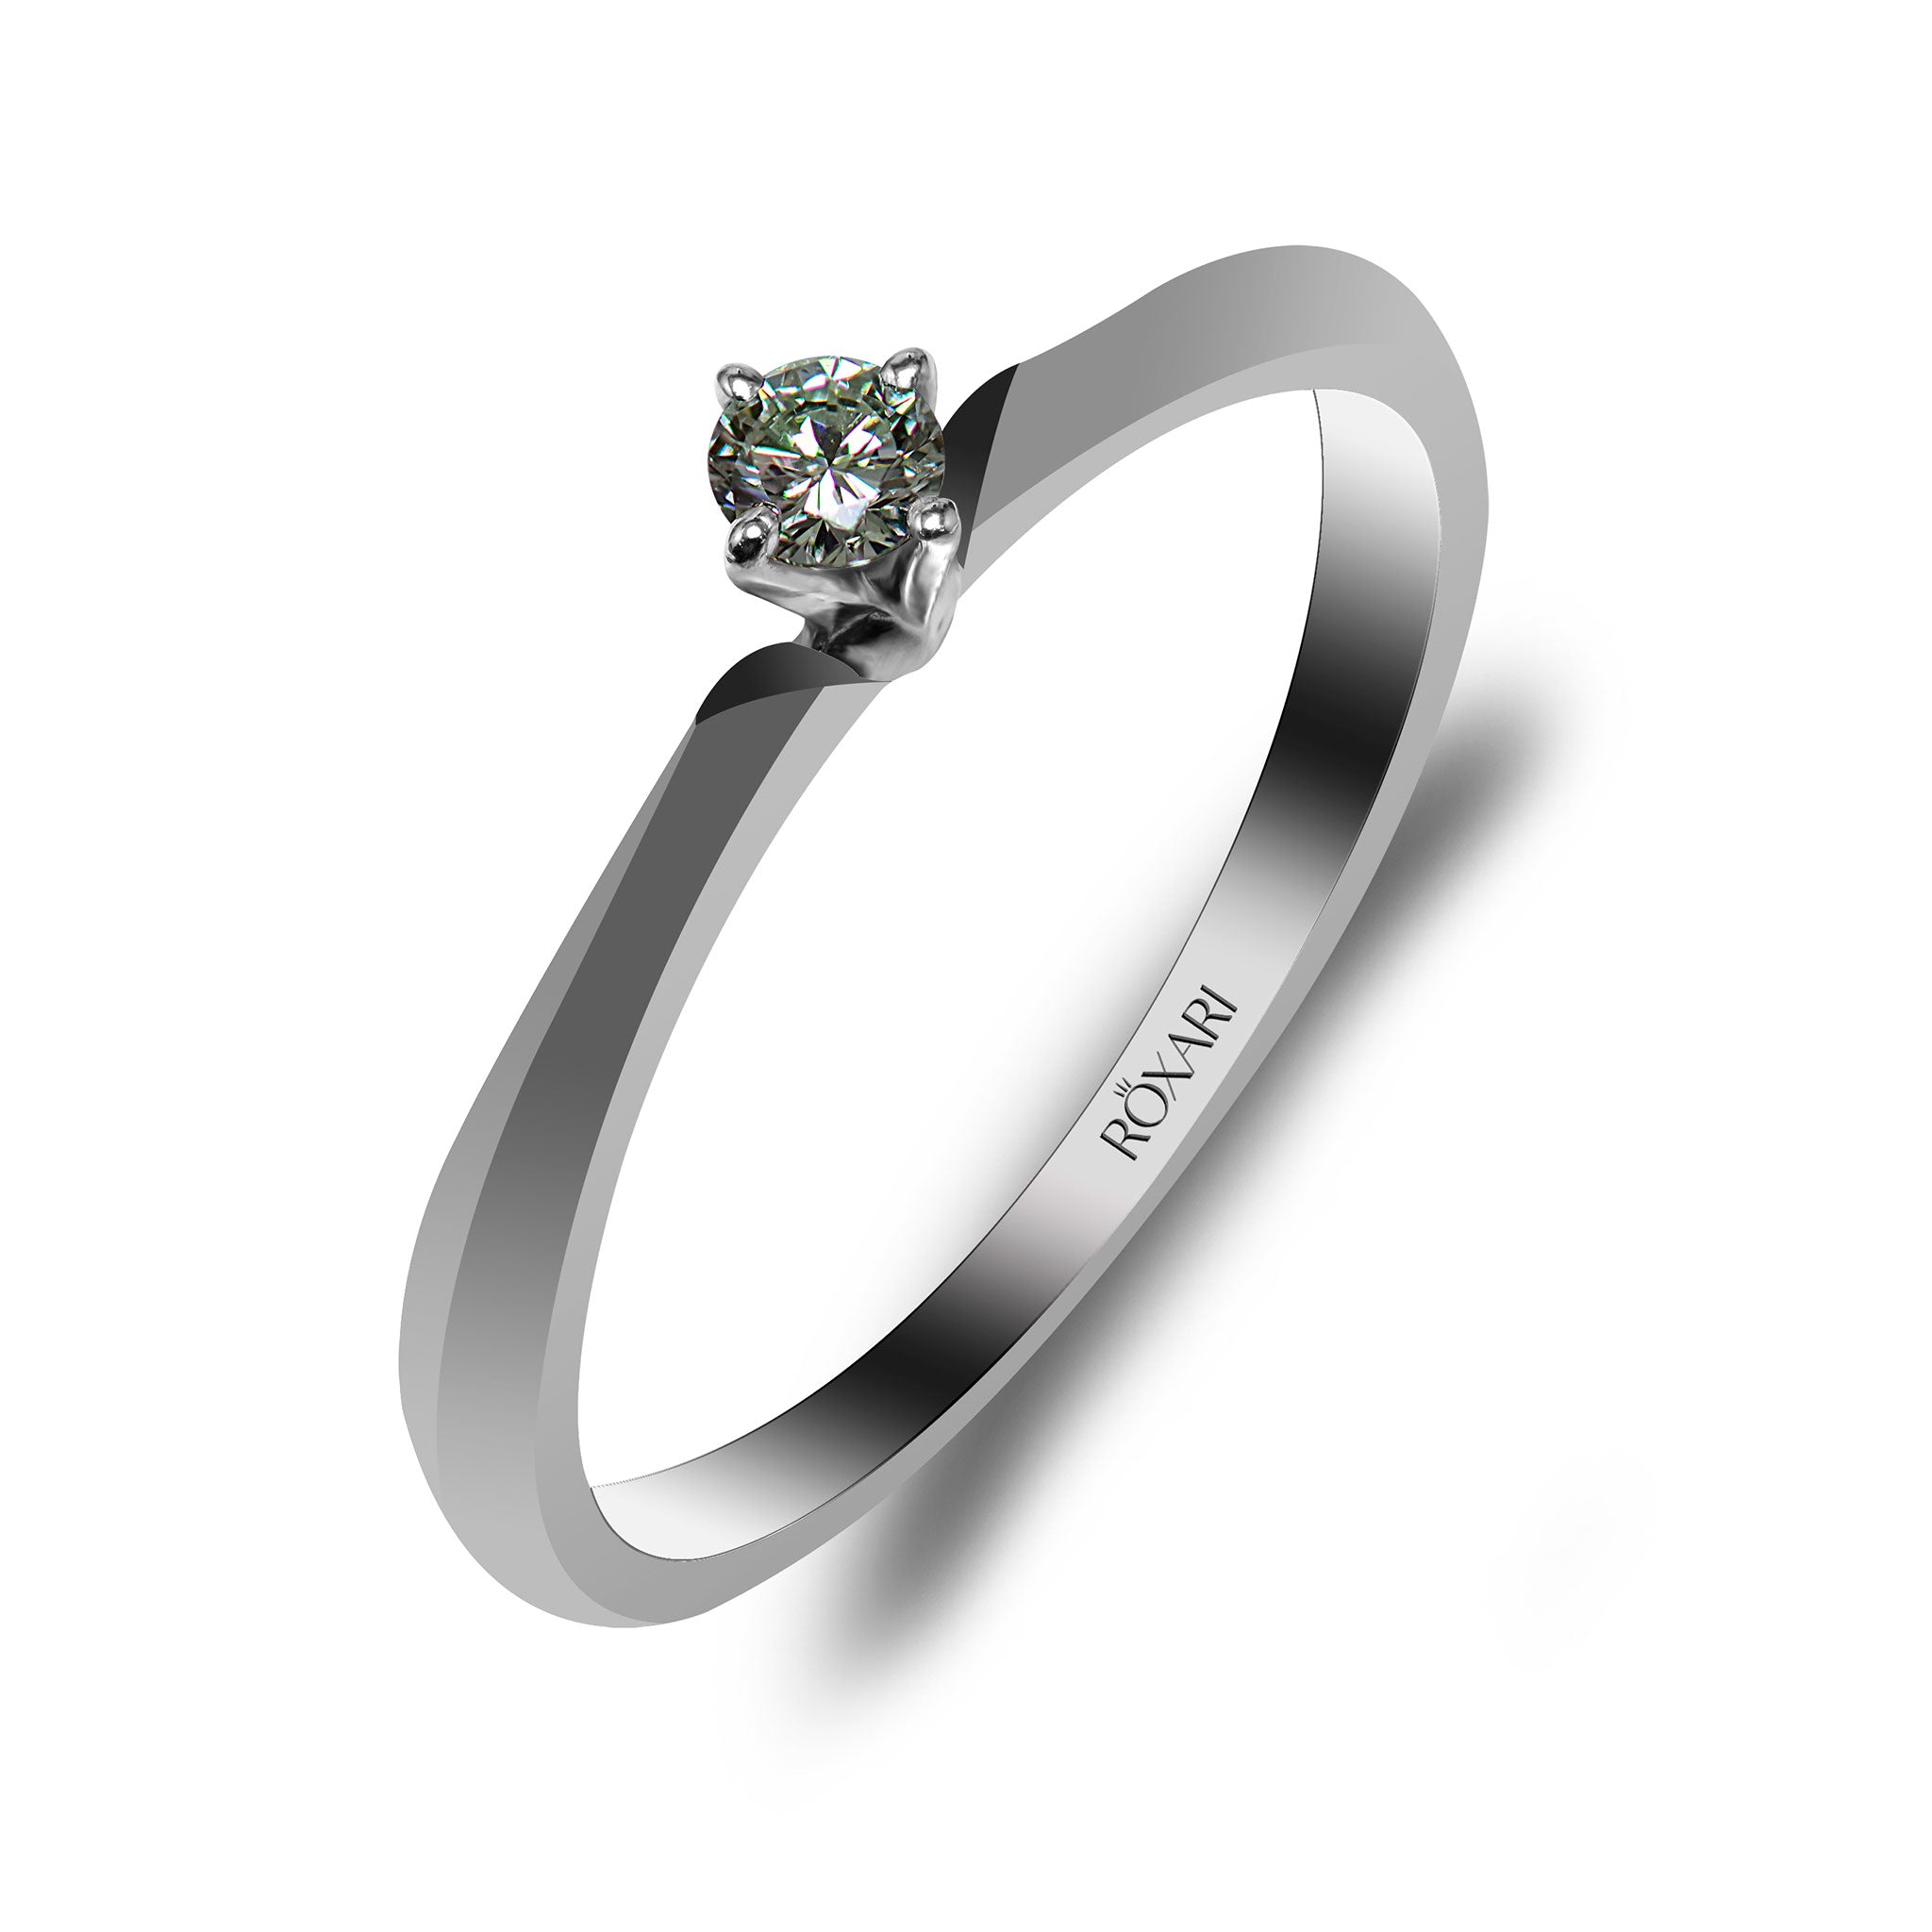 Buy Edgy Twin Diamond Rings Online | CaratLane